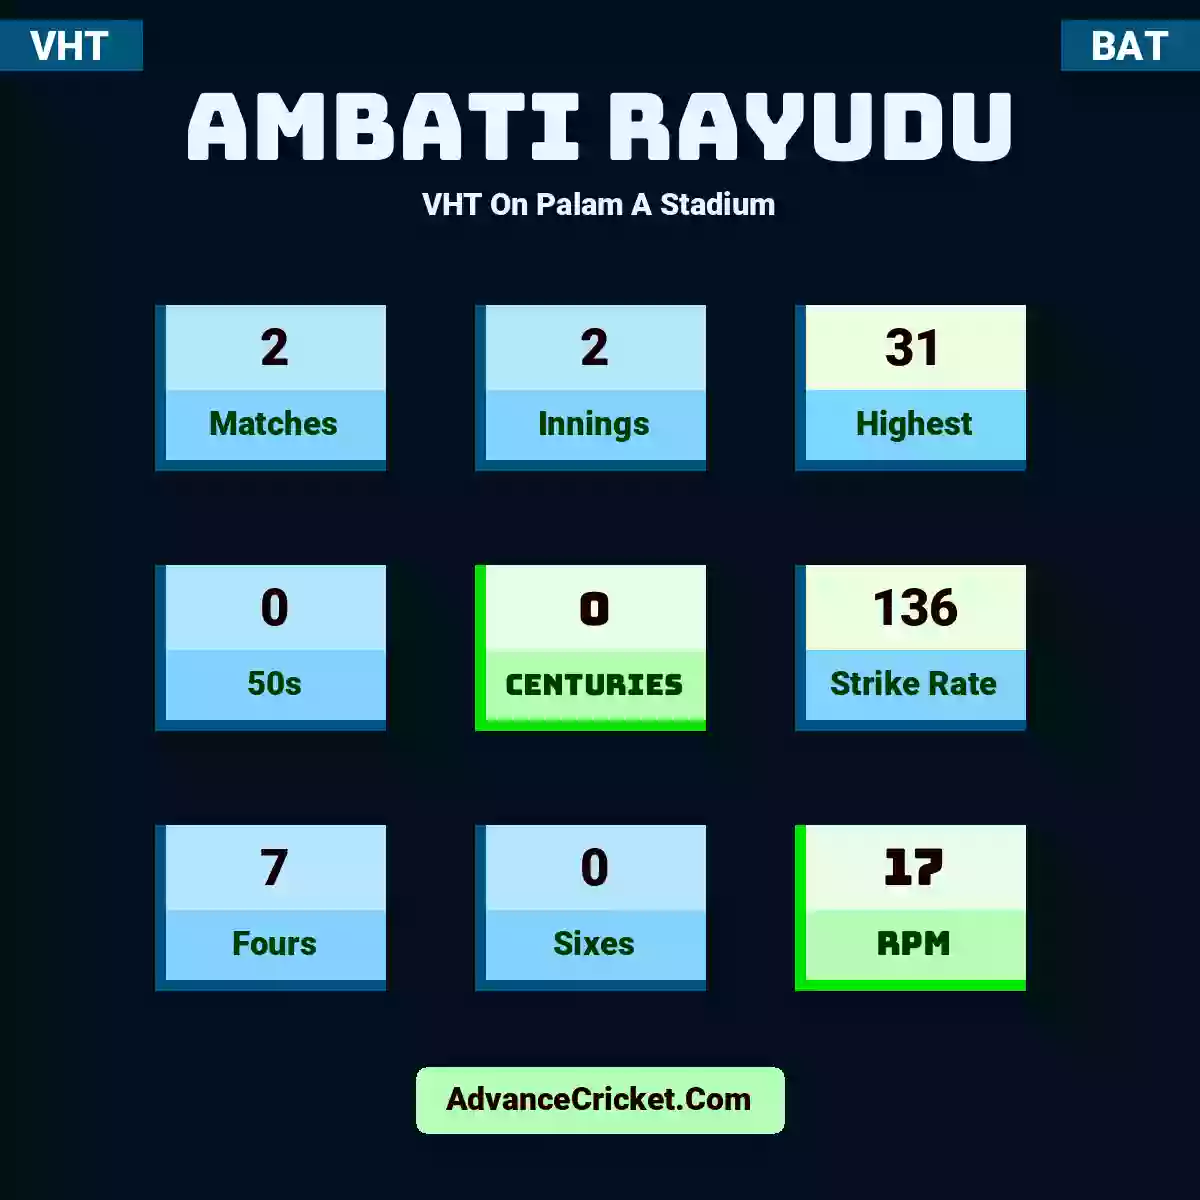 Ambati Rayudu VHT  On Palam A Stadium, Ambati Rayudu played 2 matches, scored 31 runs as highest, 0 half-centuries, and 0 centuries, with a strike rate of 136. A.Rayudu hit 7 fours and 0 sixes, with an RPM of 17.